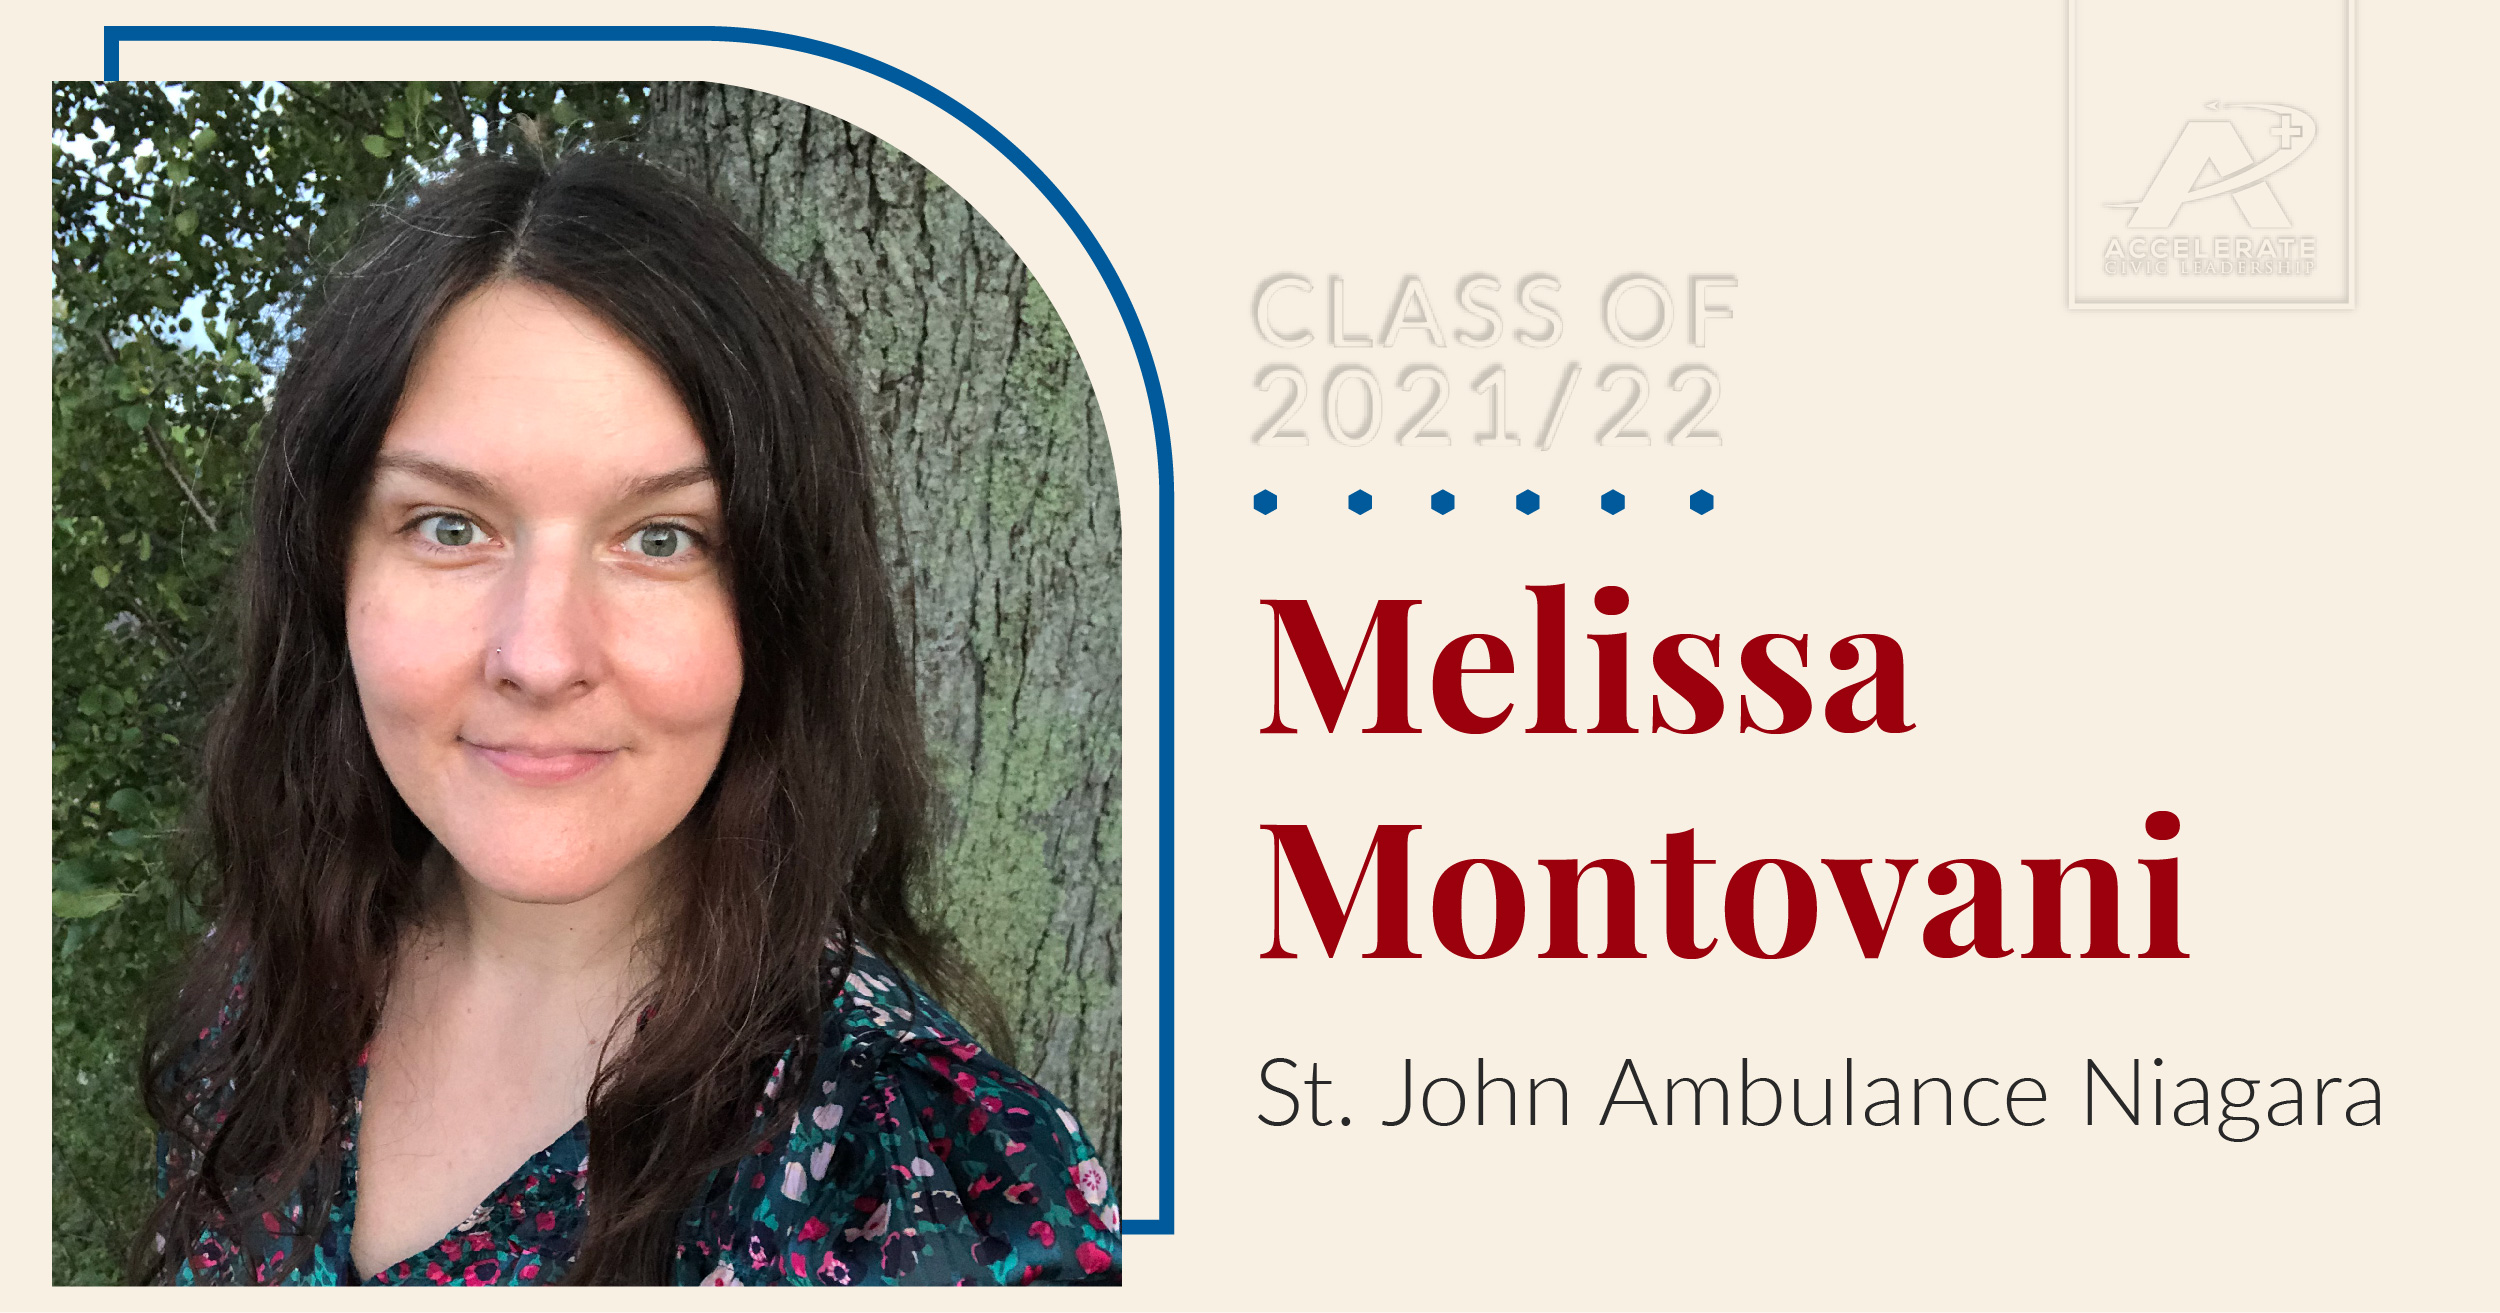 Leader spotlight for Melissa Montovani, a Client Service Coordinator with St. John Ambulance Niagara Falls.